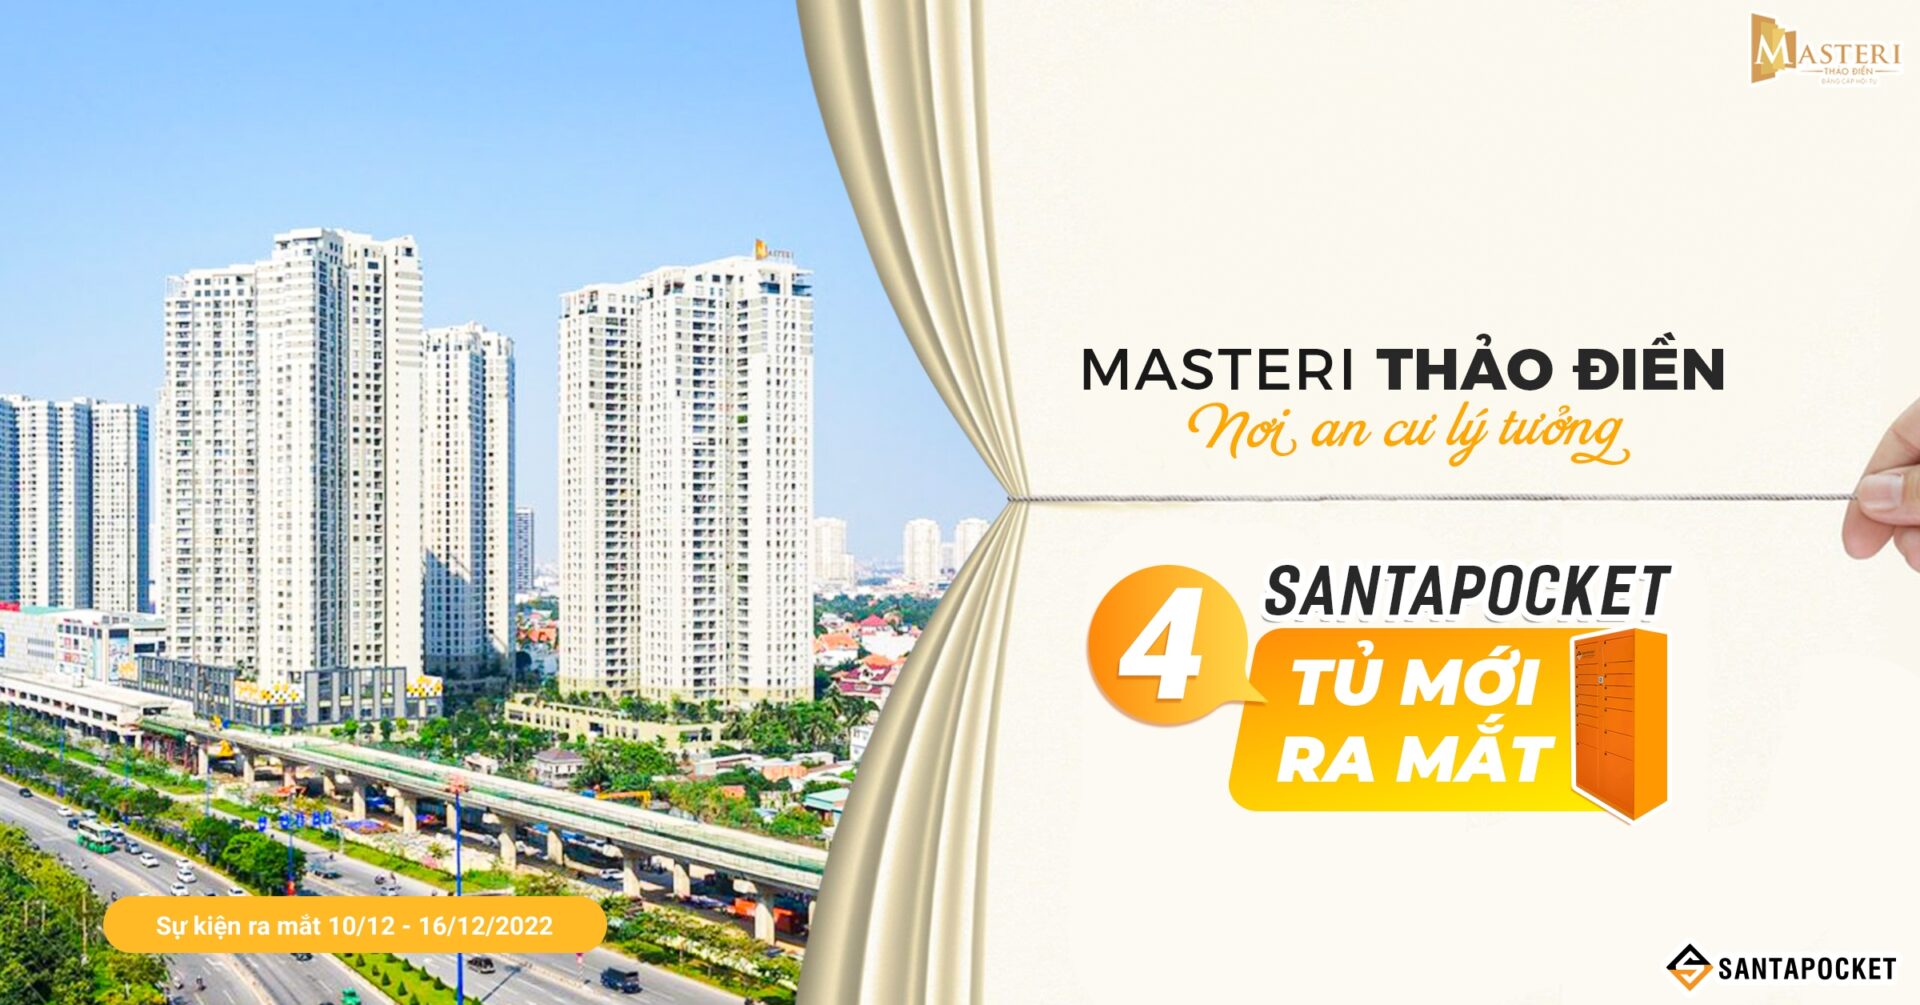 Masteri Thao Dien – SantaPocket’s next destination